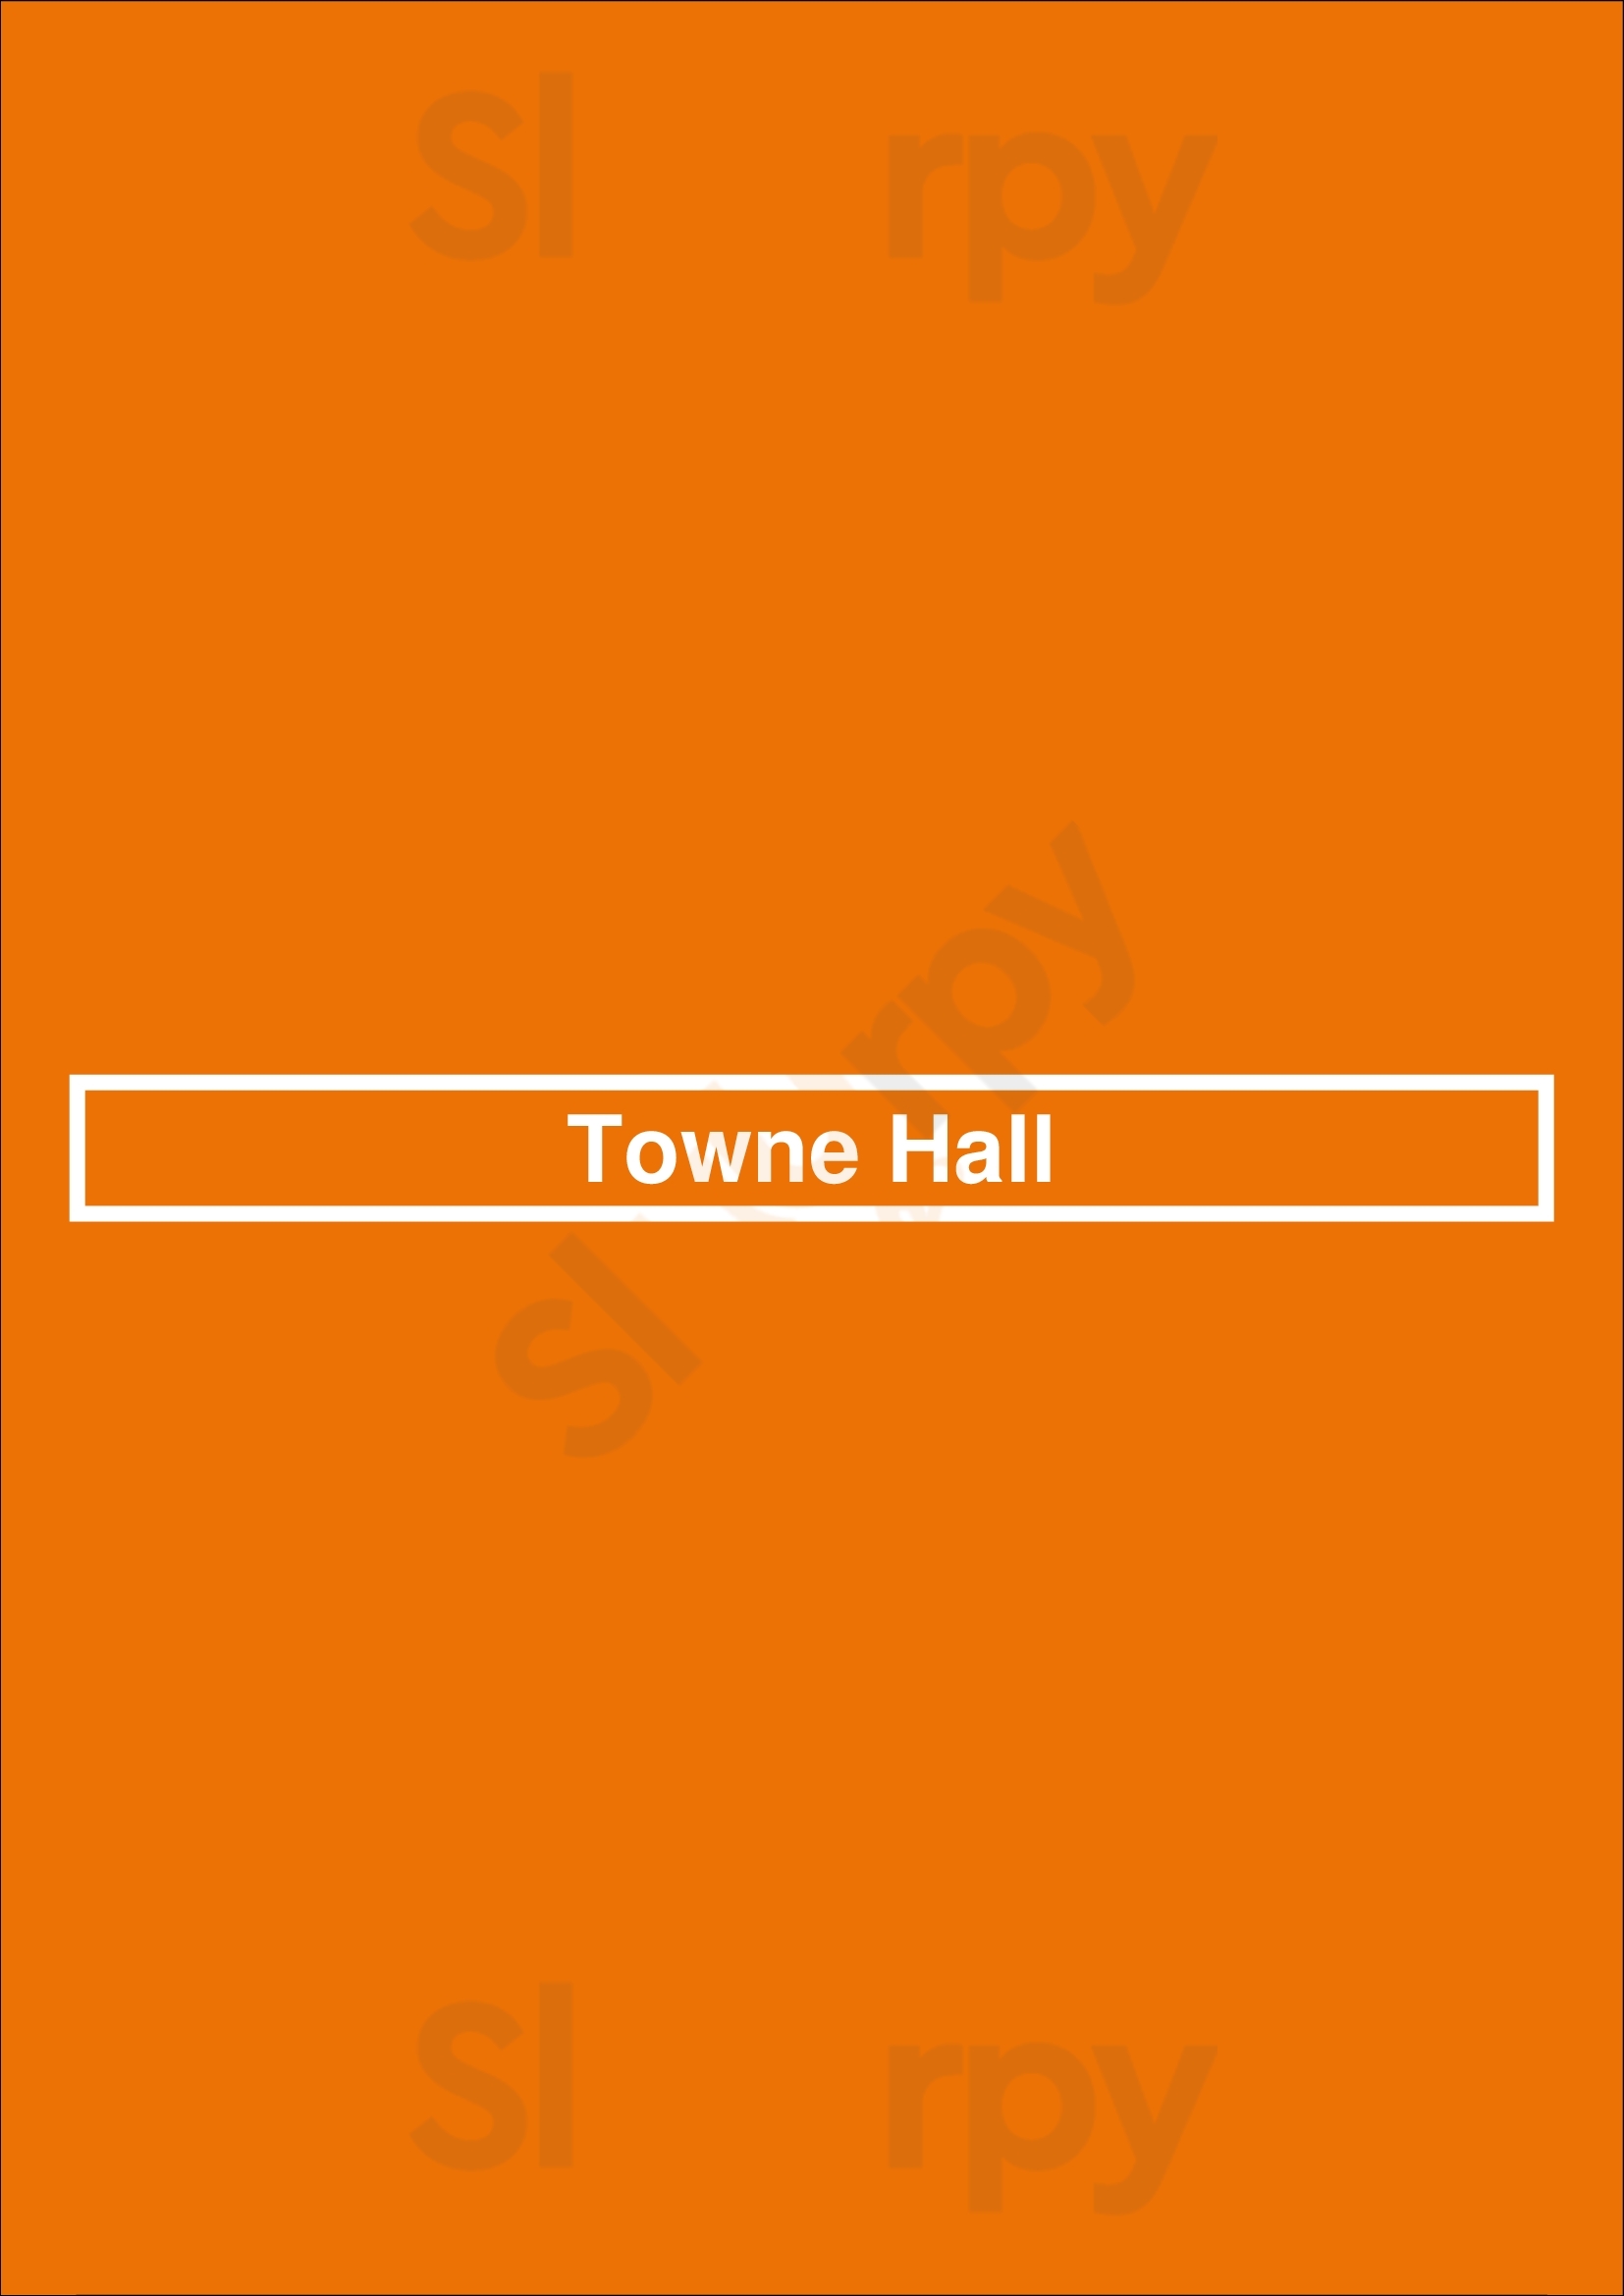 Towne Hall Pointe Claire Menu - 1